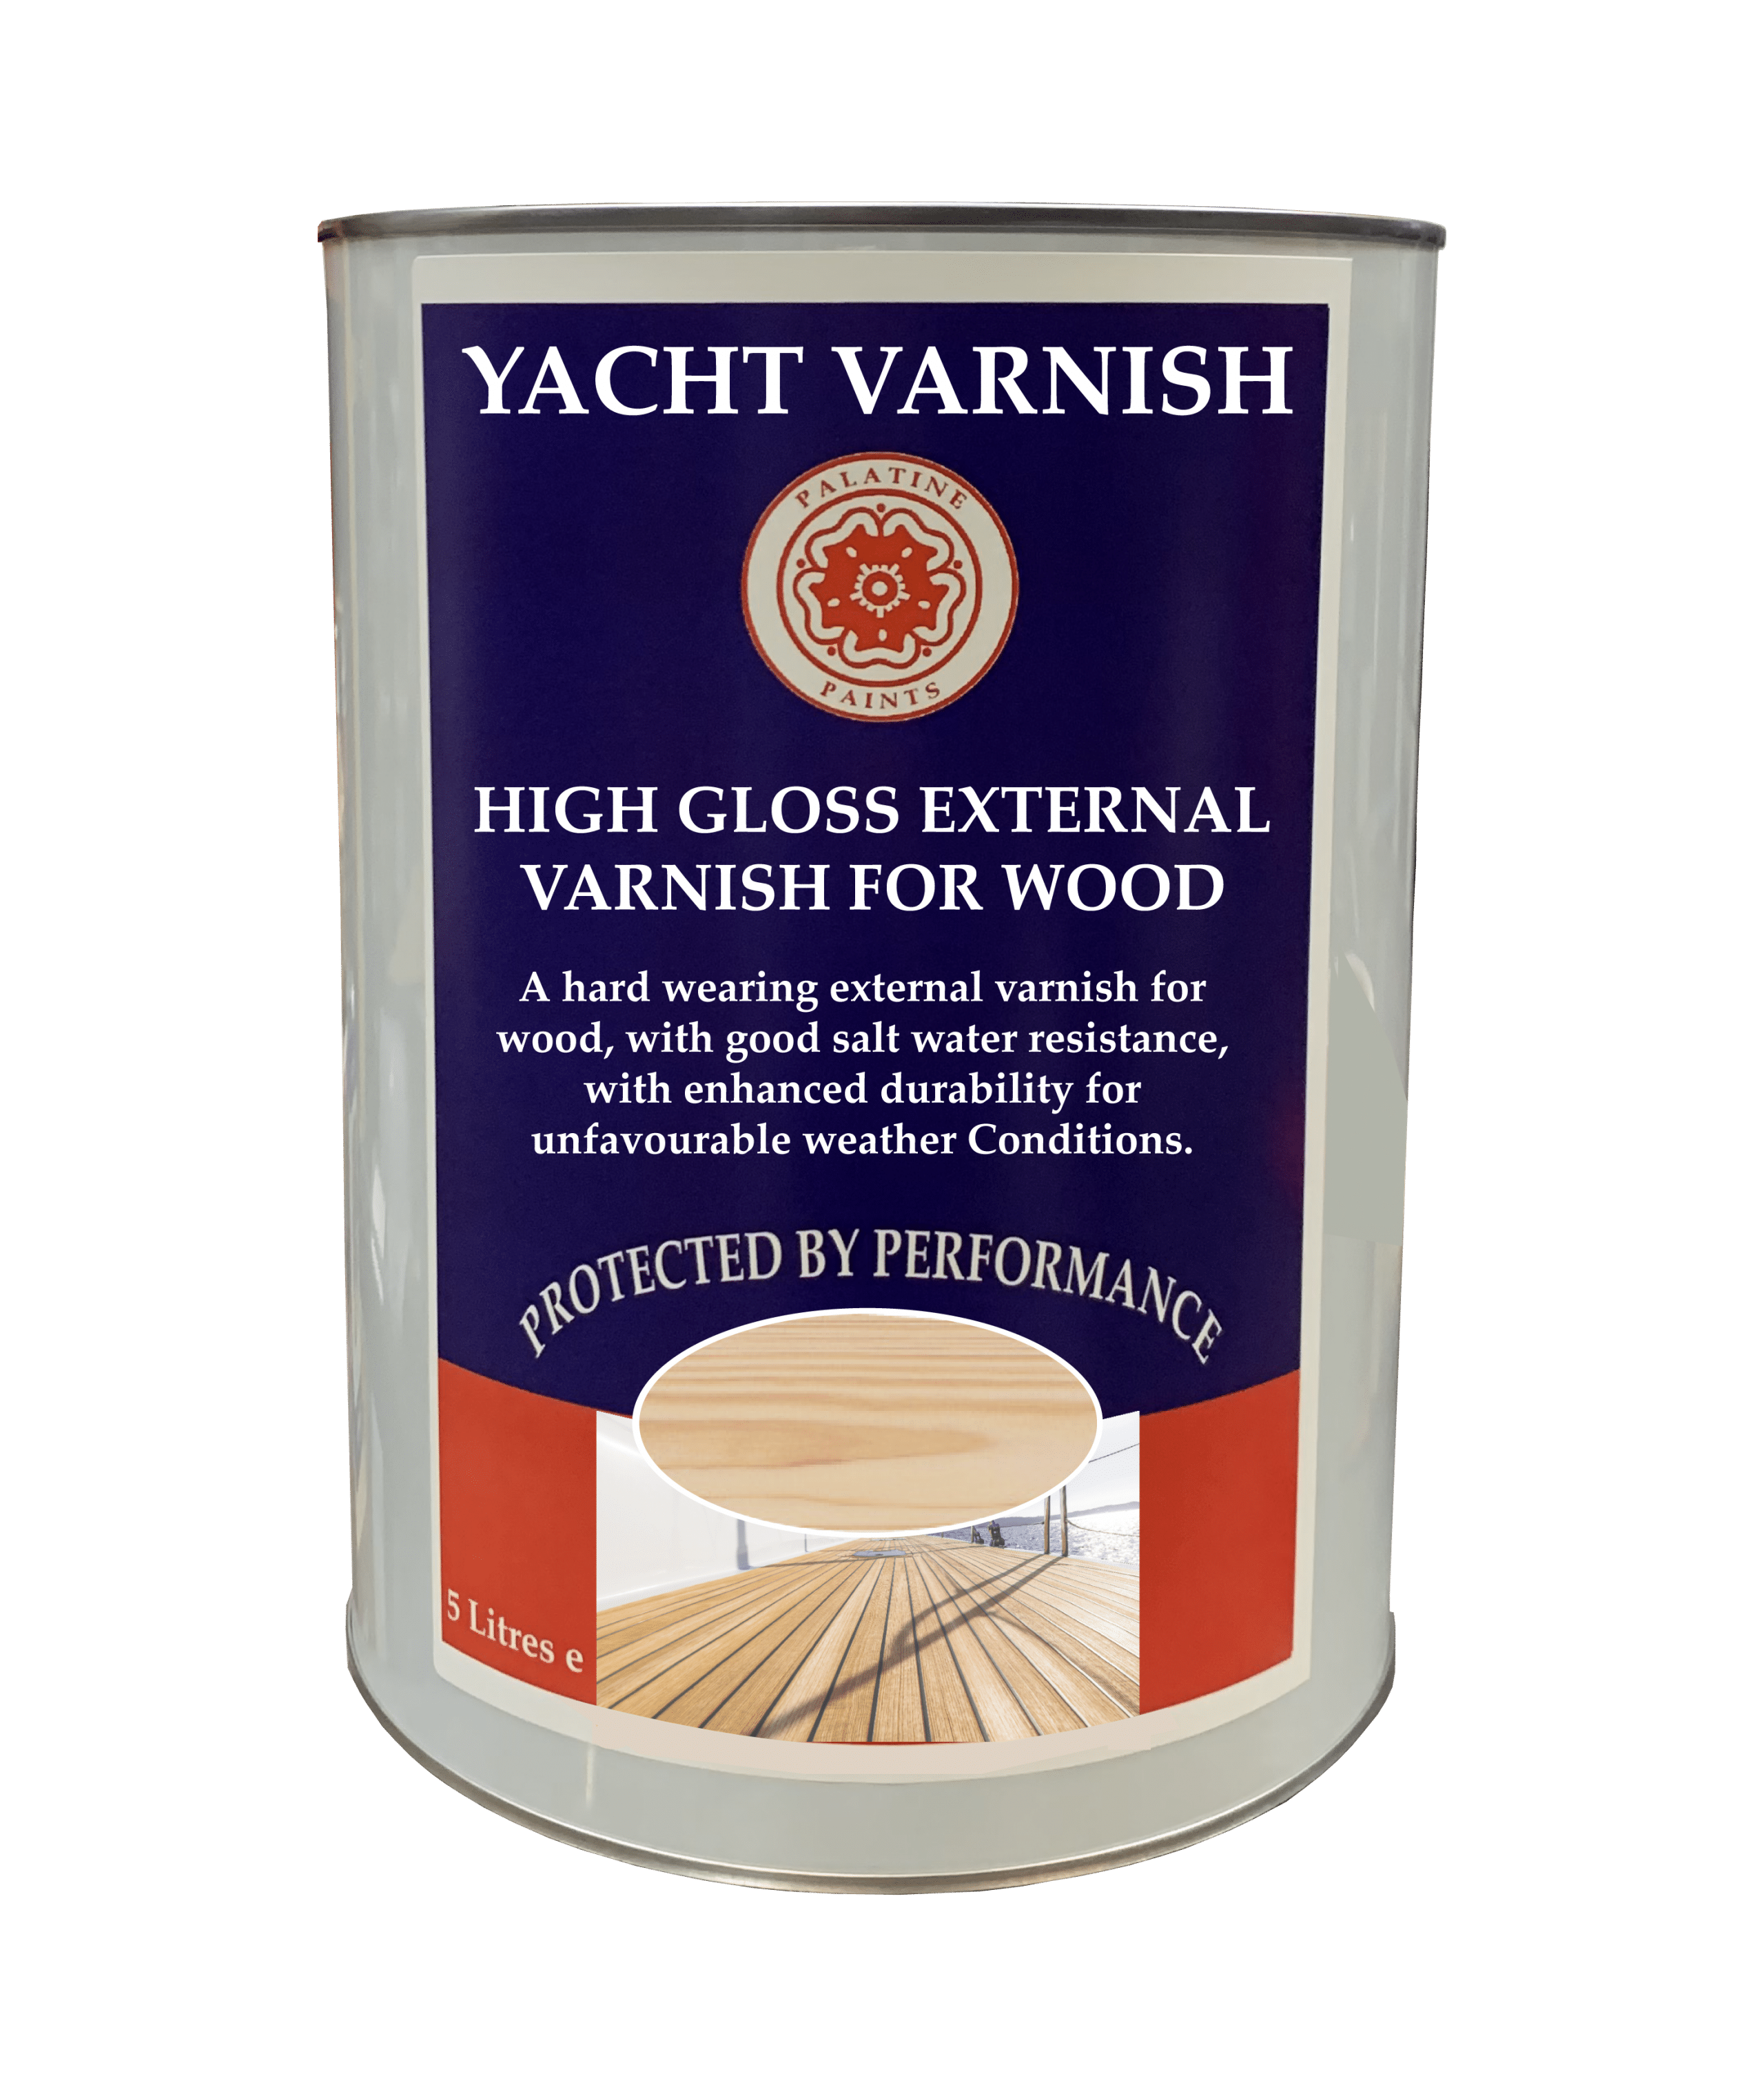 the best yacht varnish